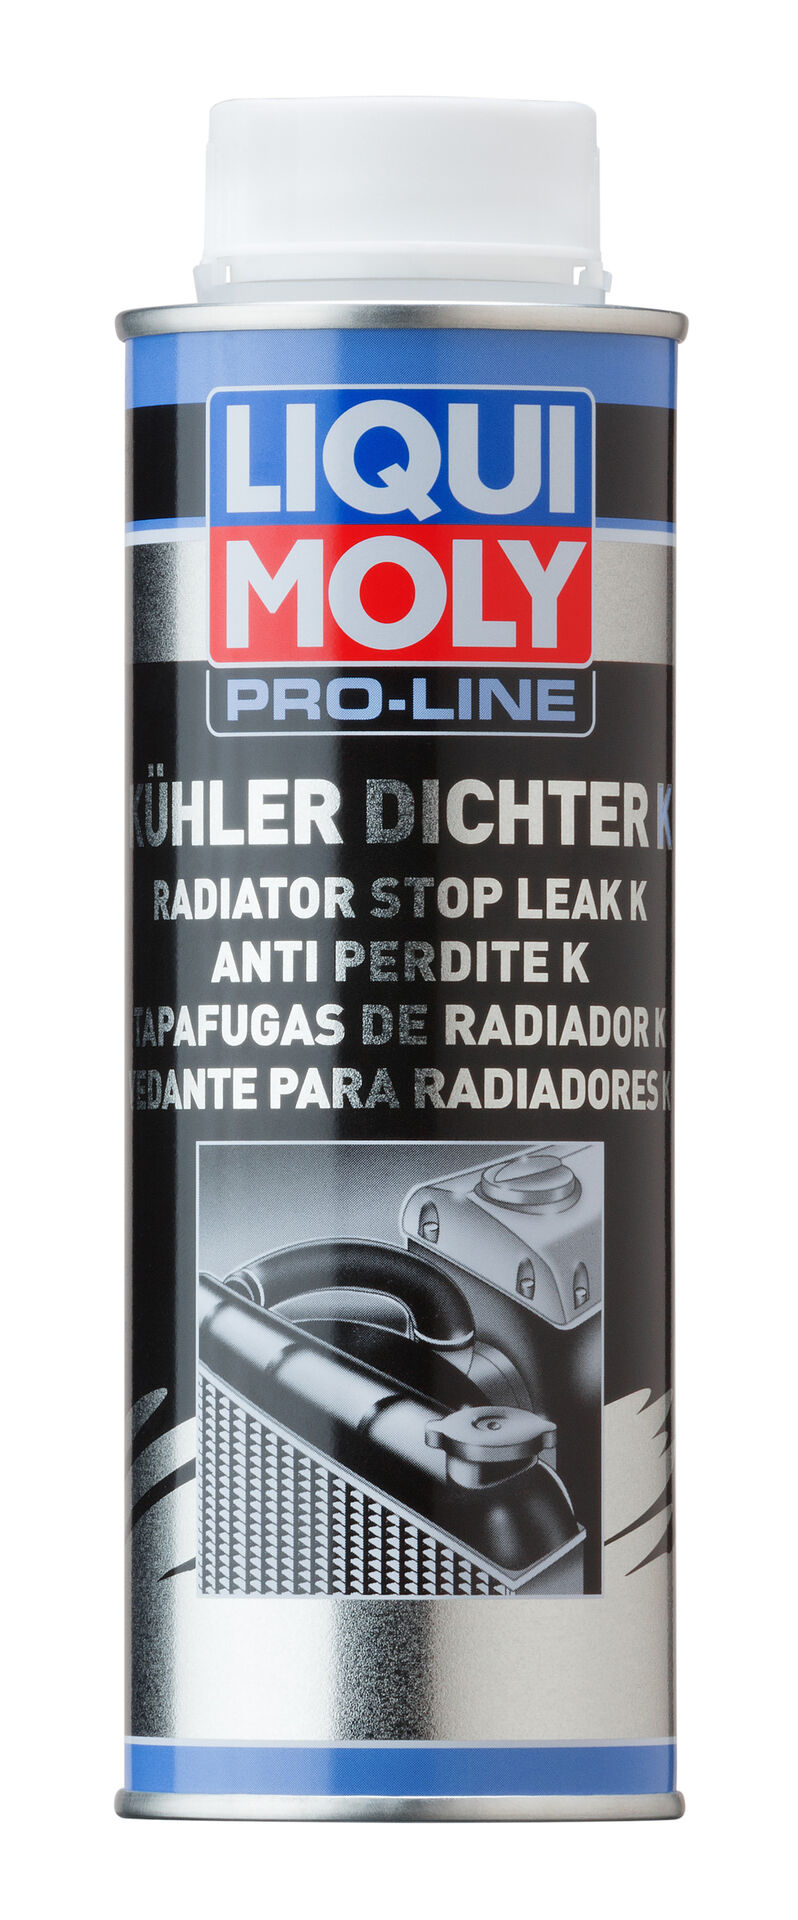 Liqui Moly 5178 1x250 ml Dose Pro-Line Kühler-Dichter K